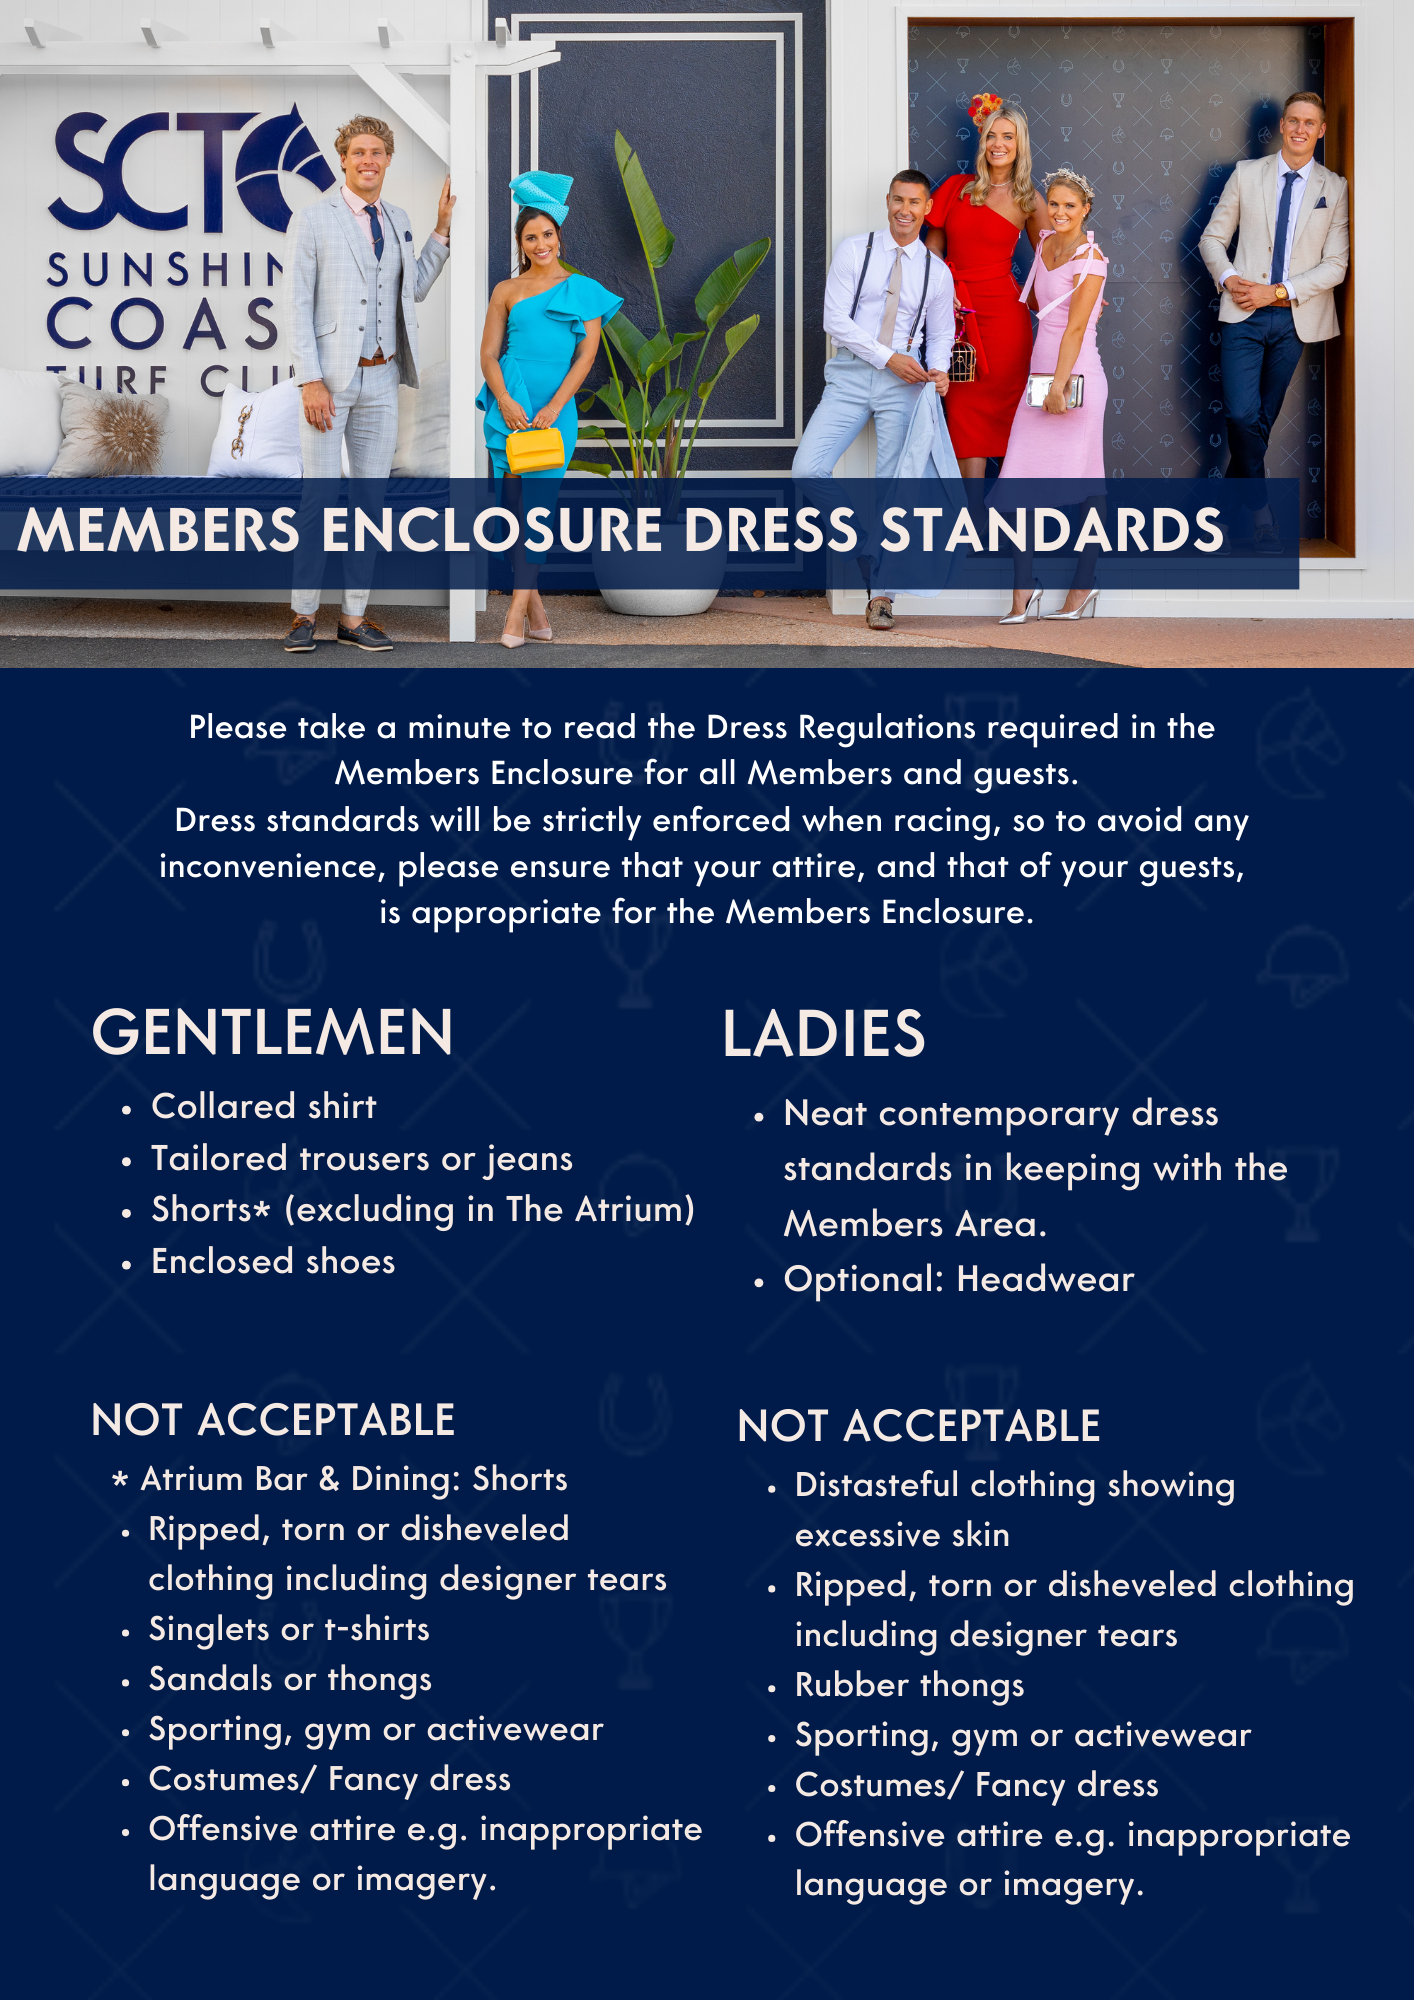 SCTC Members Encolsure Dress Standards